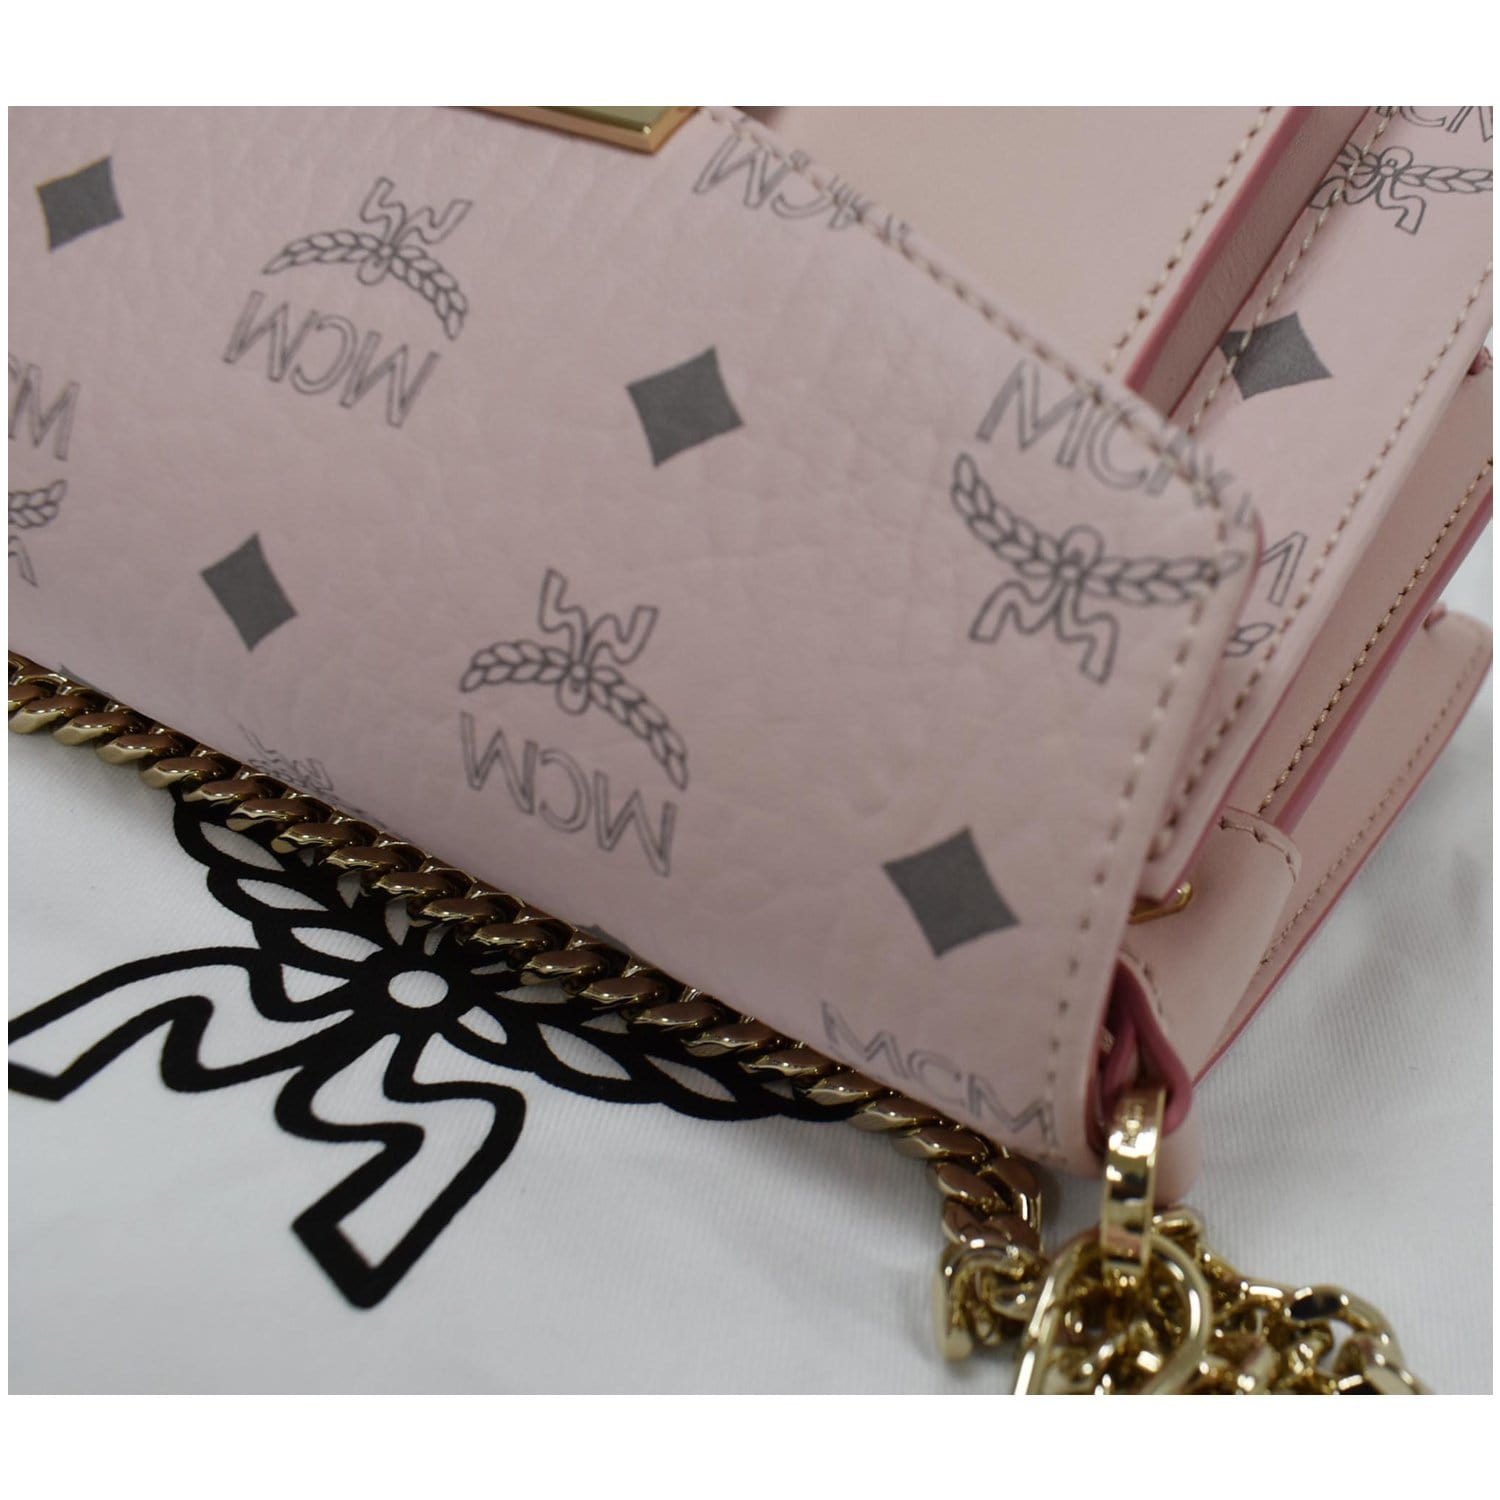 $950 MCM Patricia Visetos crossbody pink Leather Bag MWSAAPA09QH001